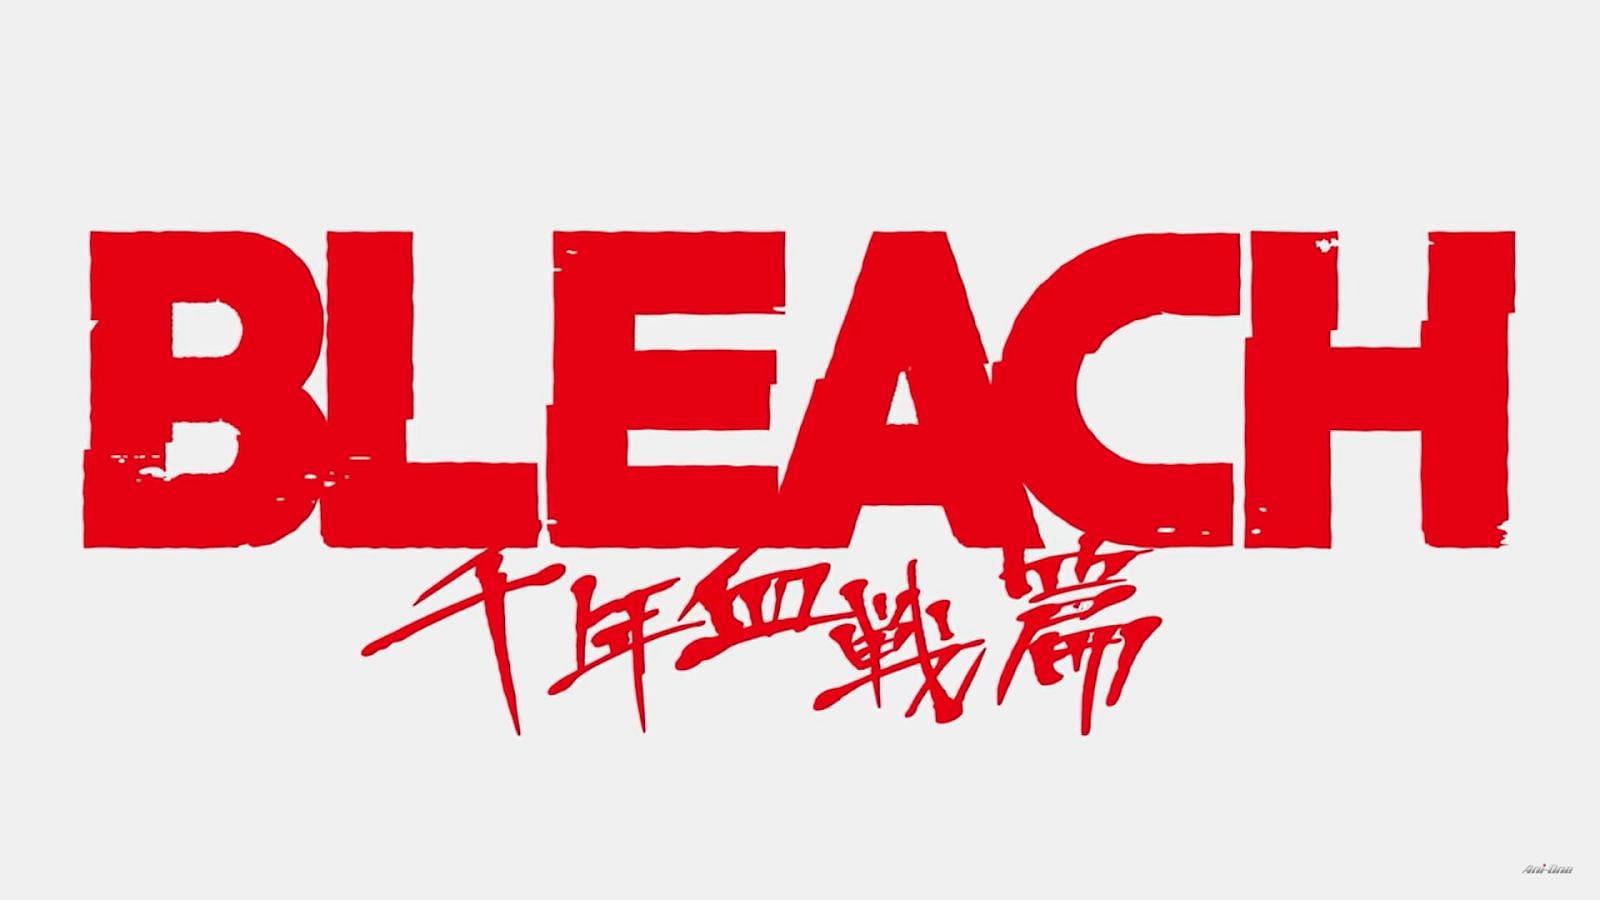 Bleach 2022 anime trailer title art (Image via YouTube)